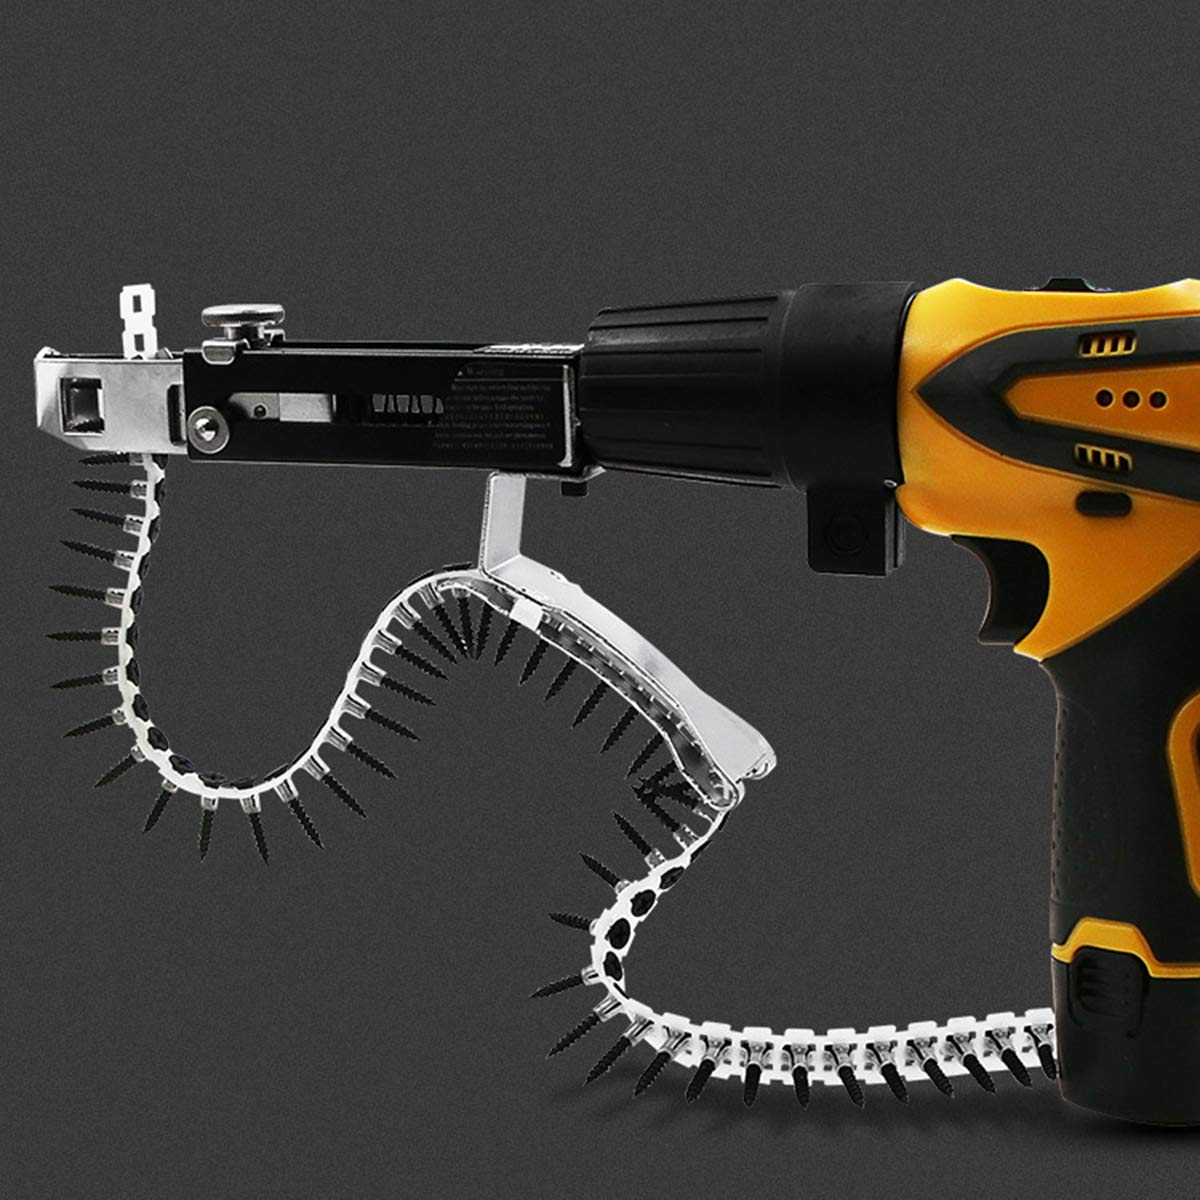 SANON framing nail gun,Automatic Chain Nail Gun Adapter Screw Gun for  Electric Drill Attachment Woodworking Tool : Amazon.co.uk: DIY & Tools